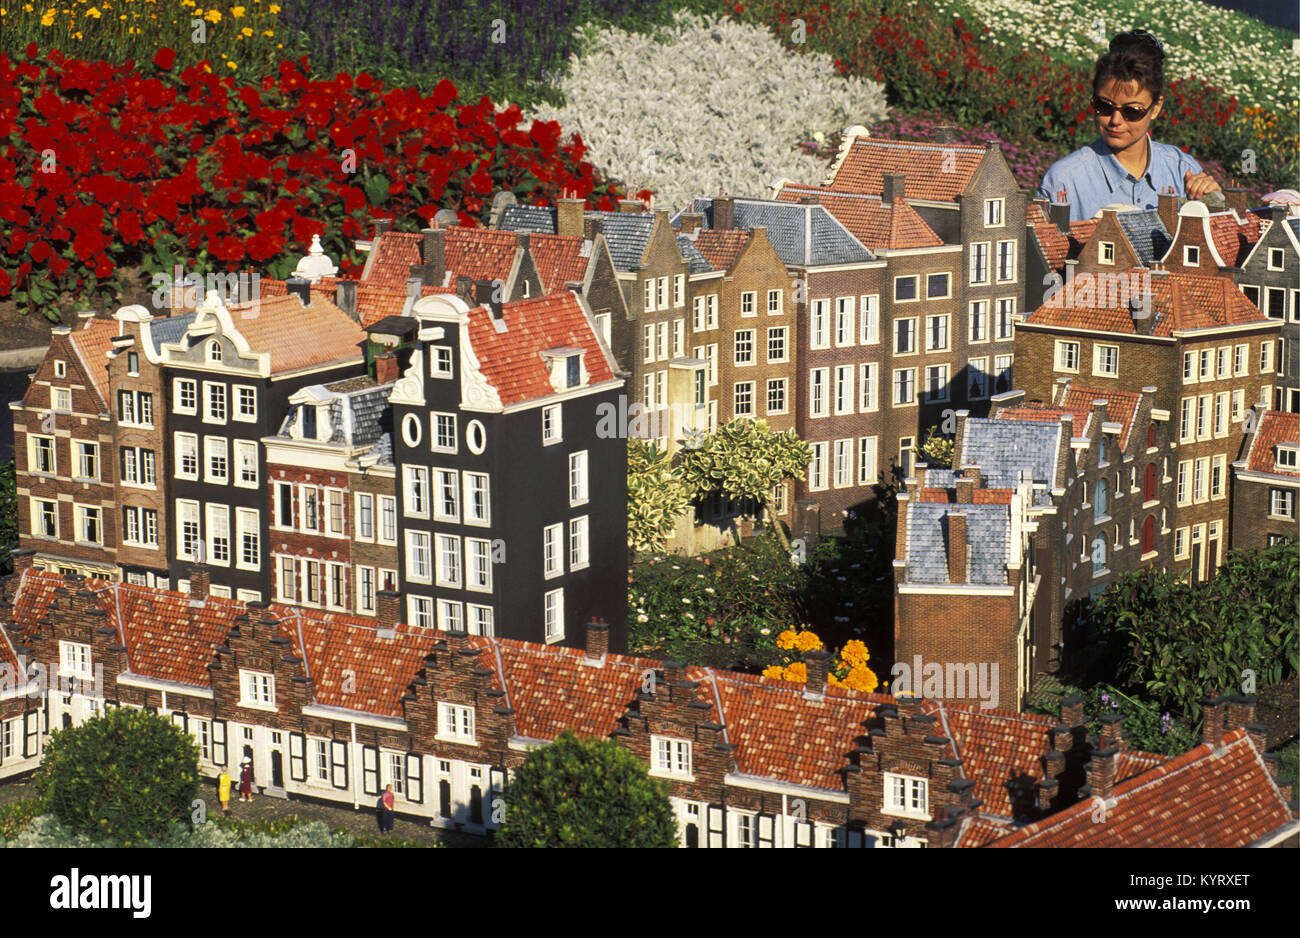 The Netherlands. Den Haag. The Netherlands in miniature called Madurodam. Stock Photo